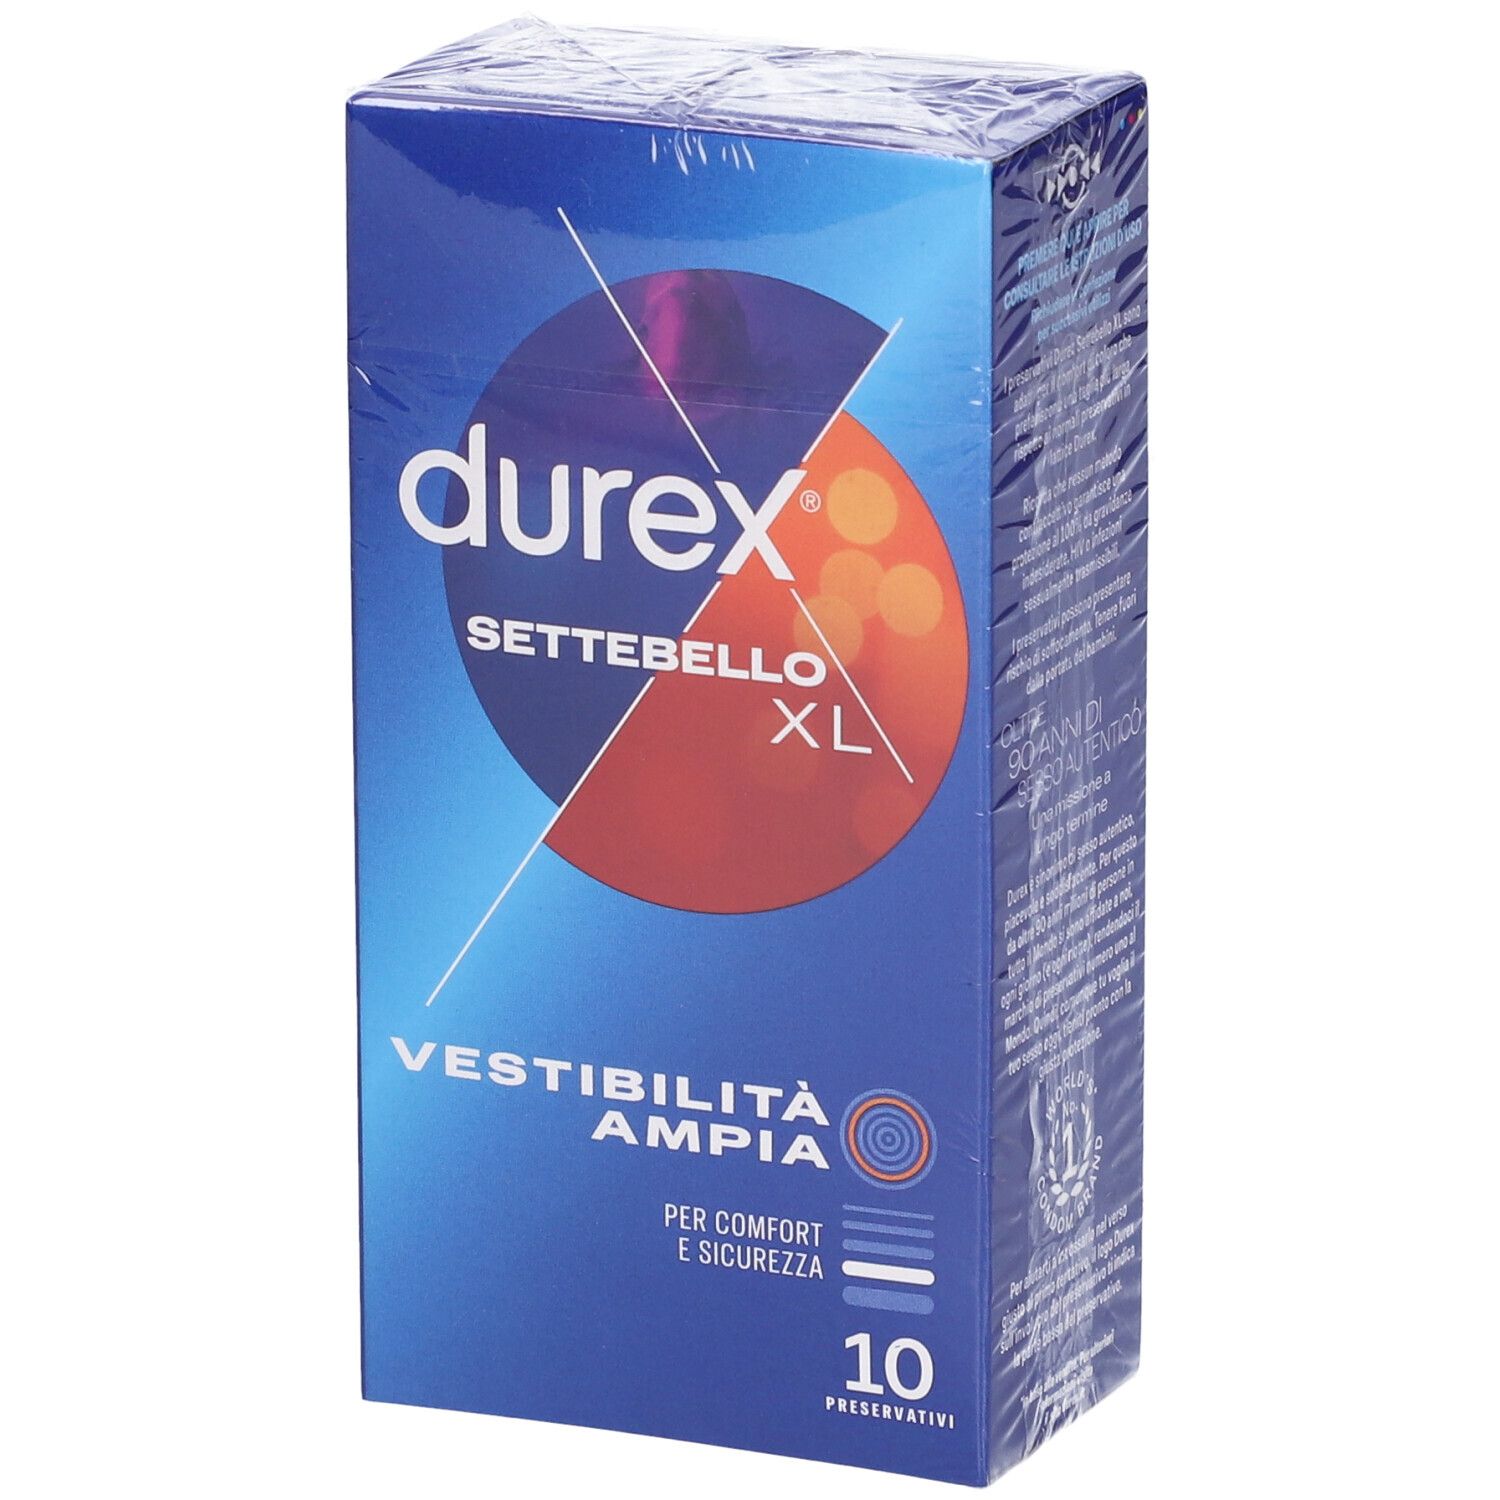 Durex Settebello Preservativi Extralarge